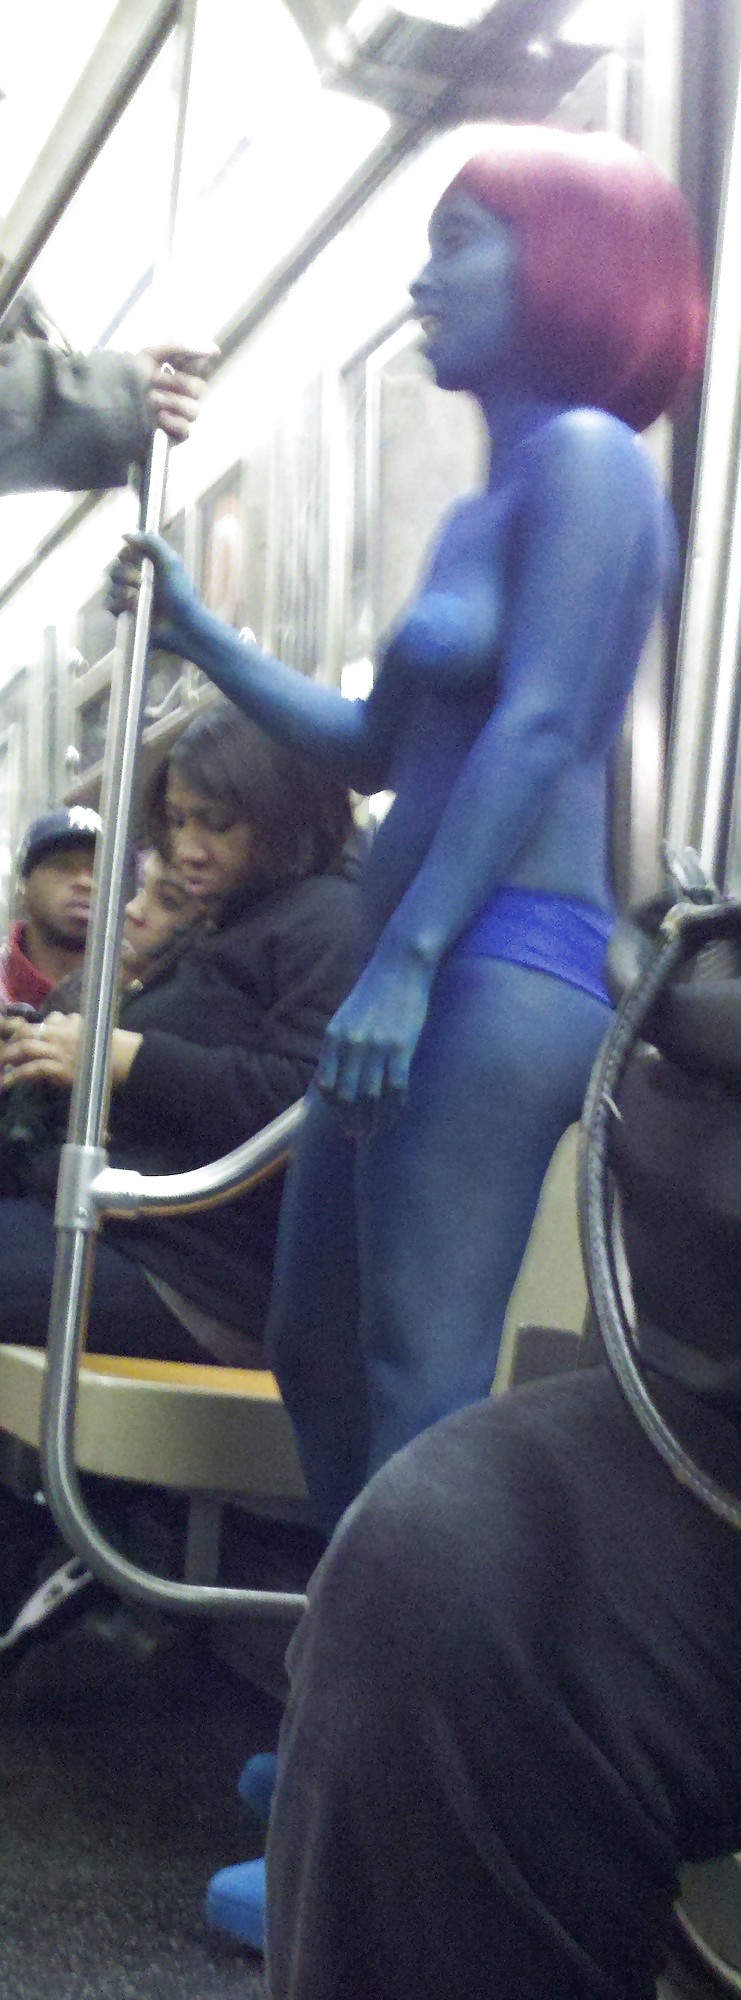 Sex New York Subway Girls 113 Halloween Avatar Girl or Mystique image